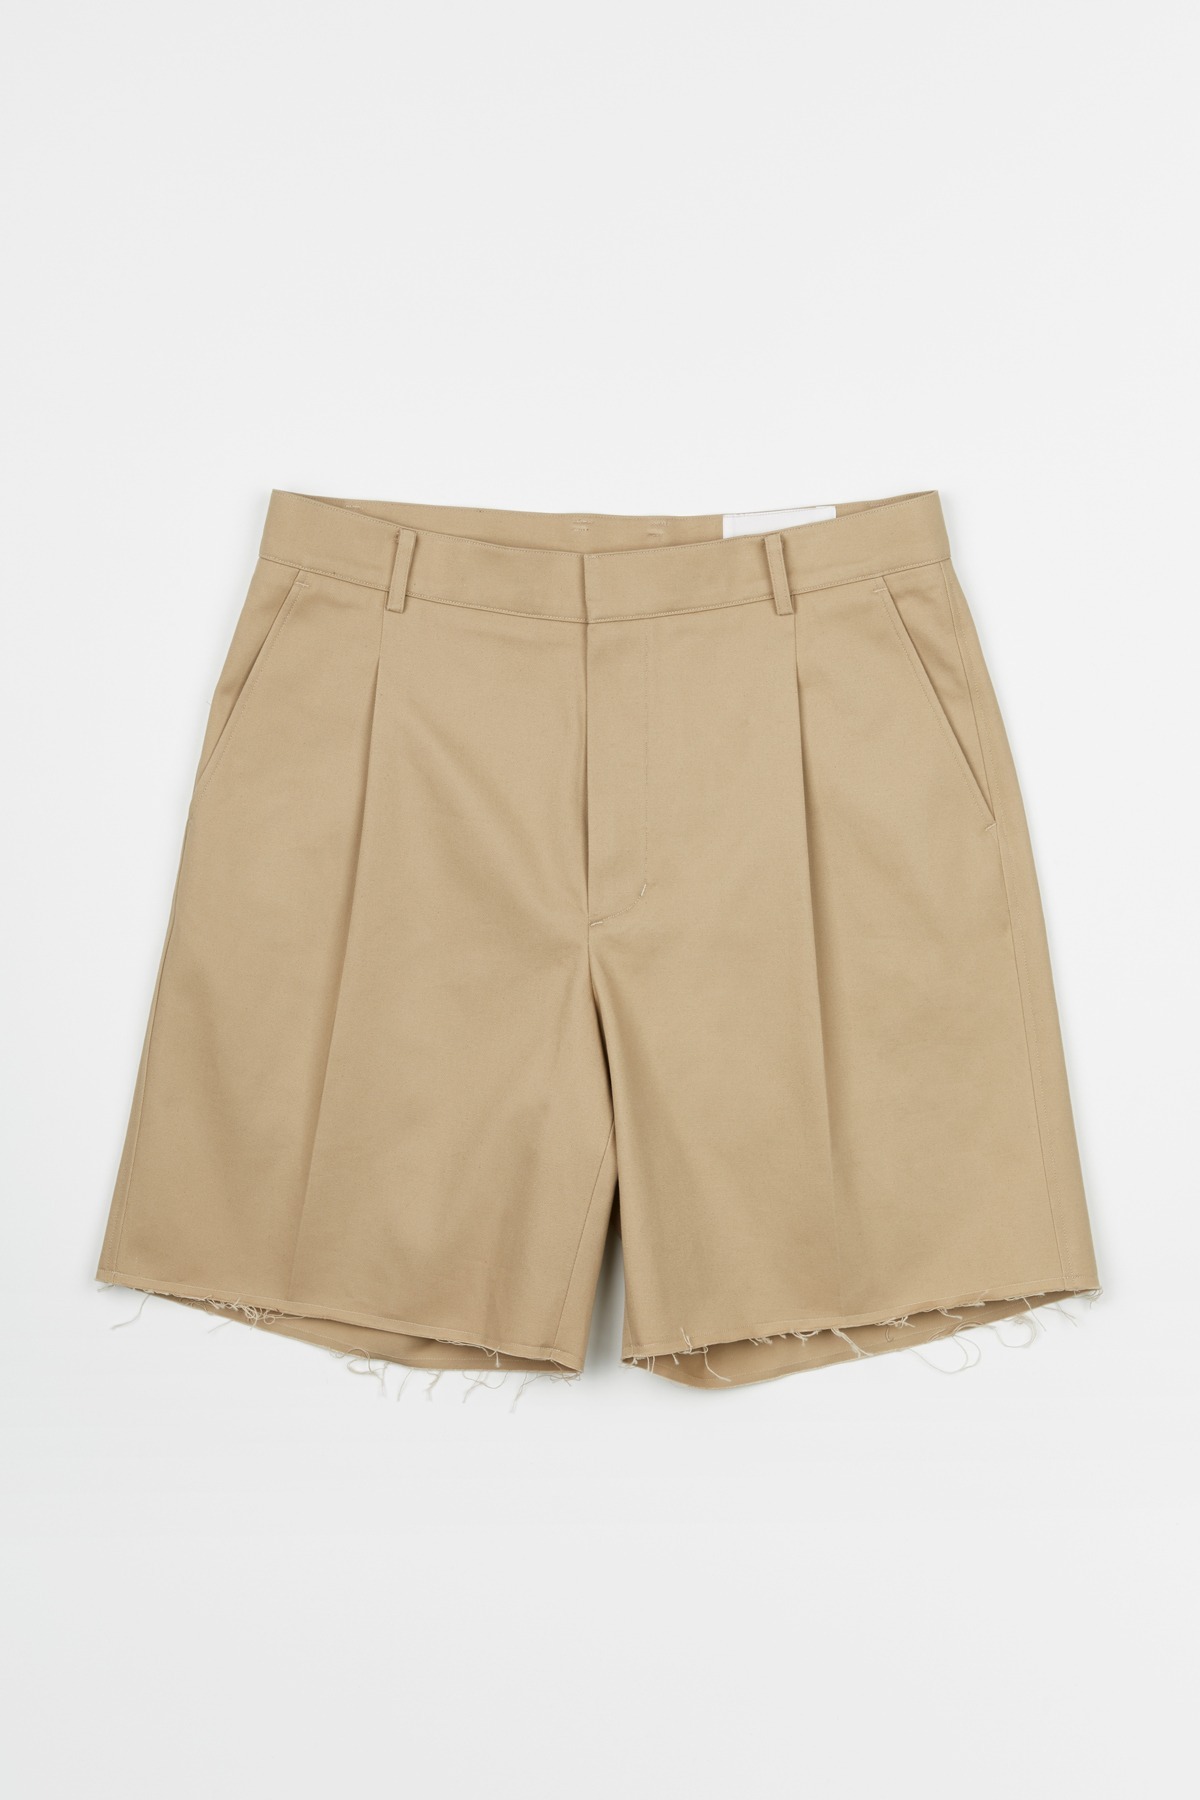 [Restock] Cutoff Chino Shorts_BEIGE